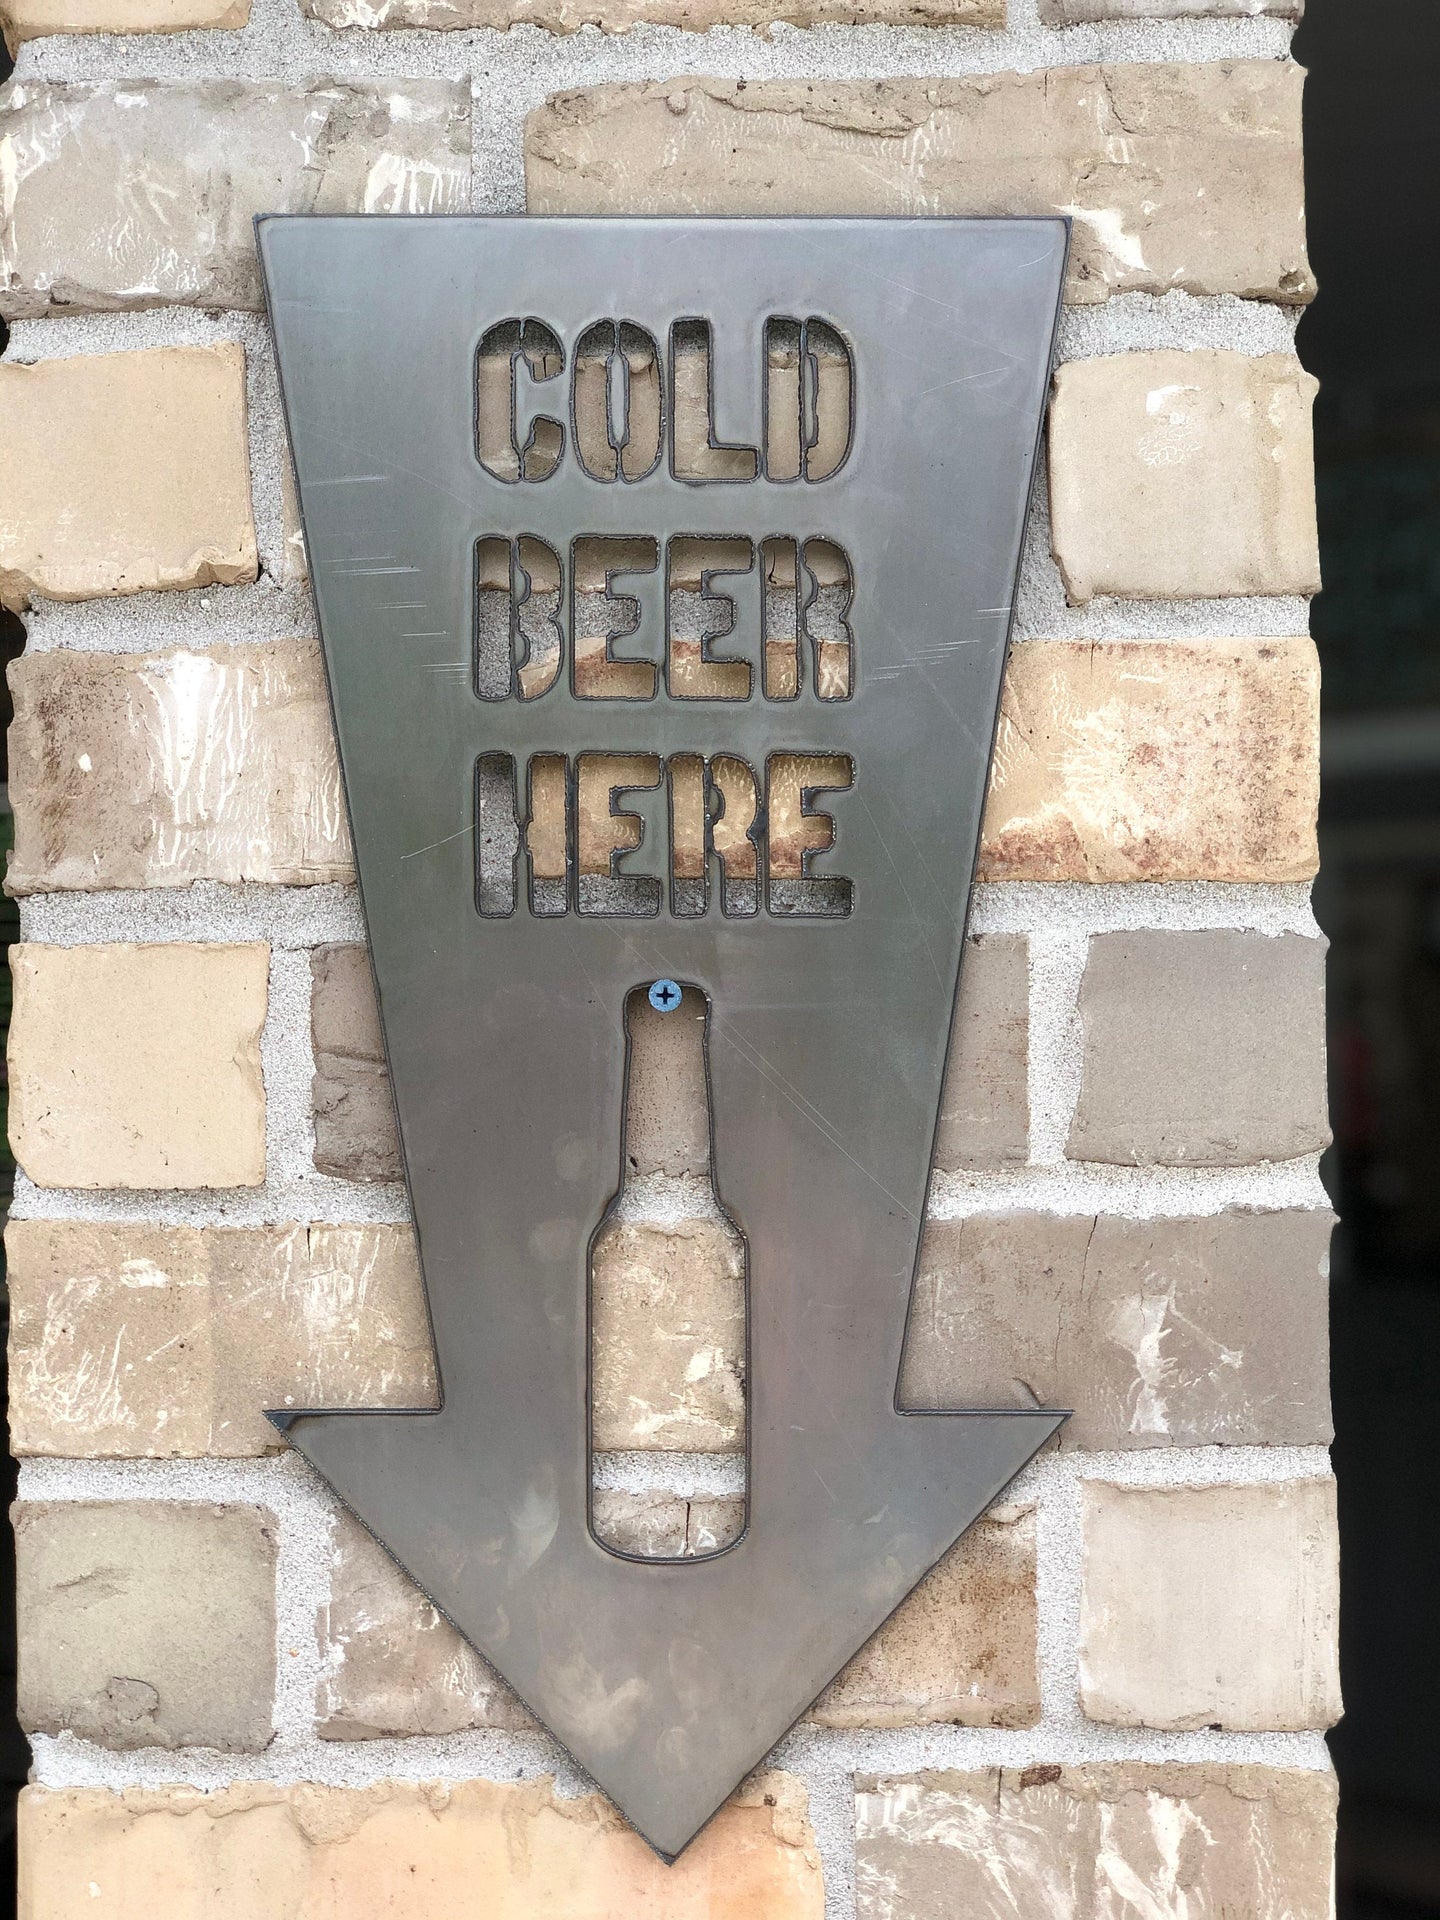 Cold Beer Here Metal Sign, Man Cave Bar Sign, Cold Beer Arrow Sign, Cold Beer Vertical Sign, Bars Decorative Sign, Beer Lover Bar Sign